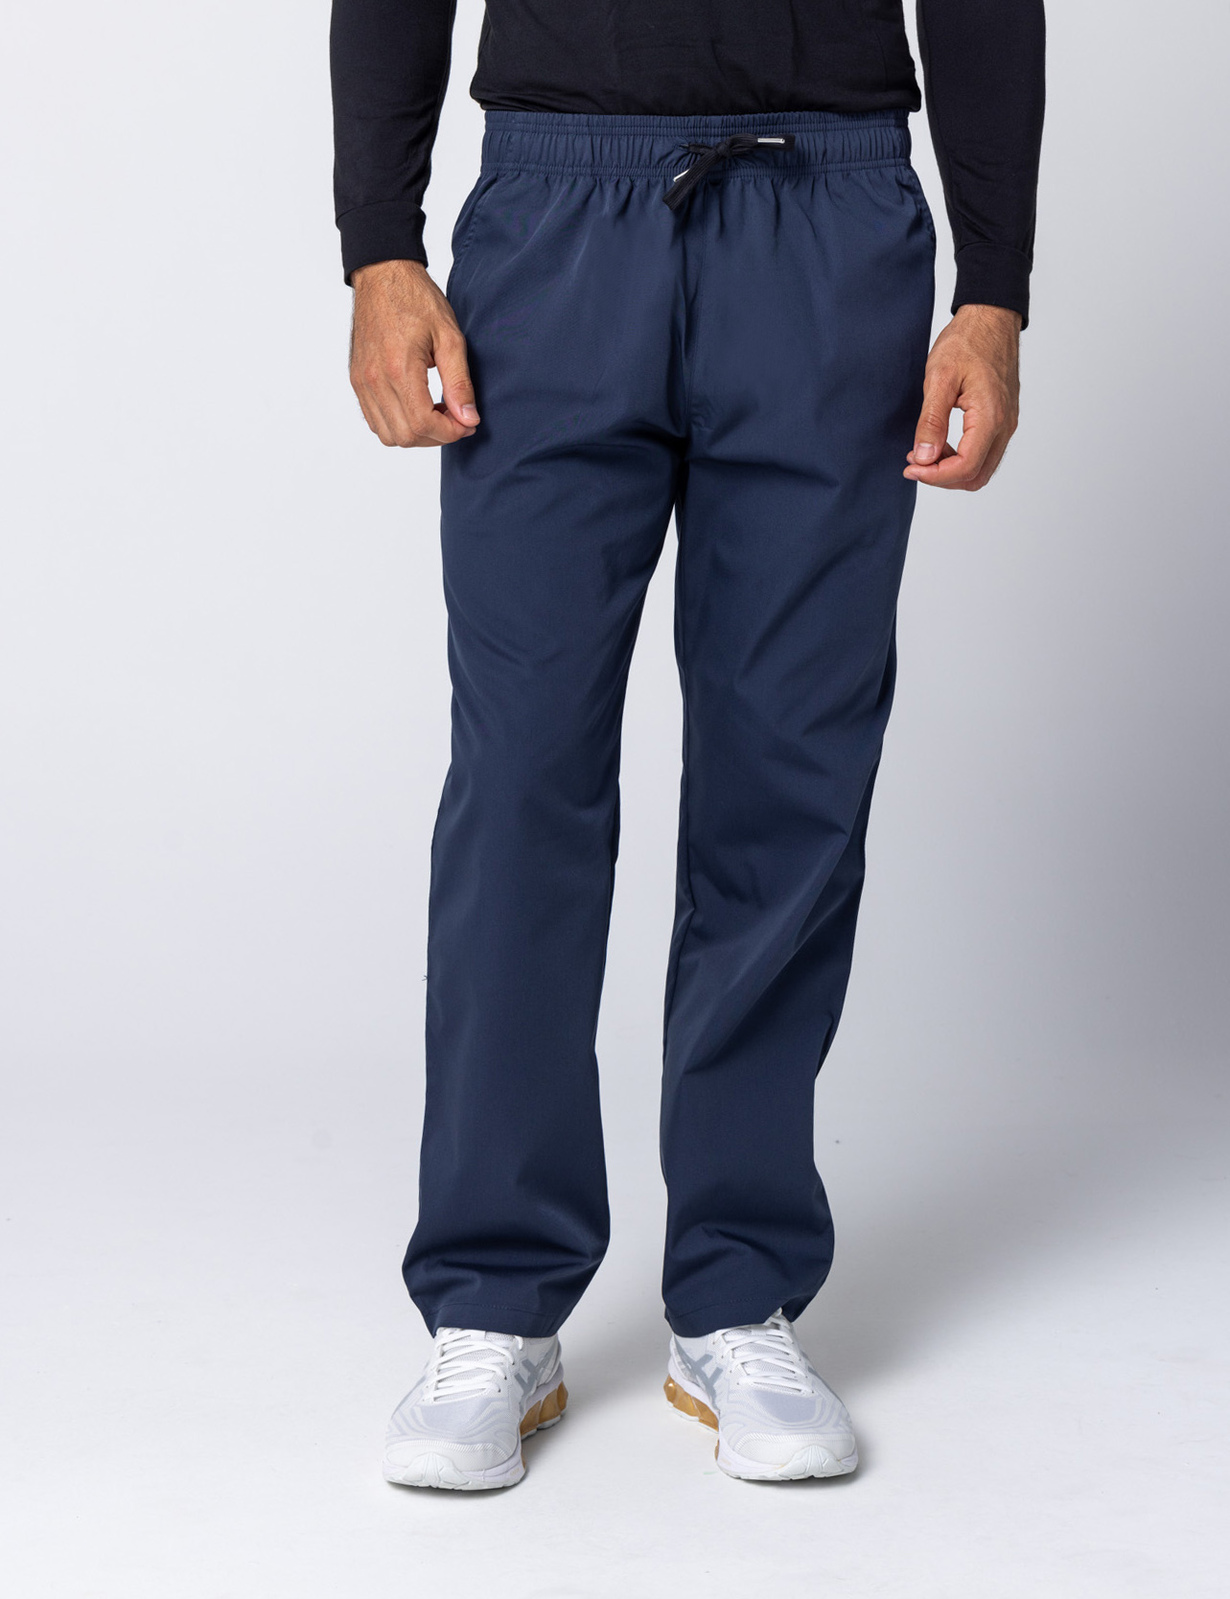 Men's Regular Cut Pants - Navy - Large